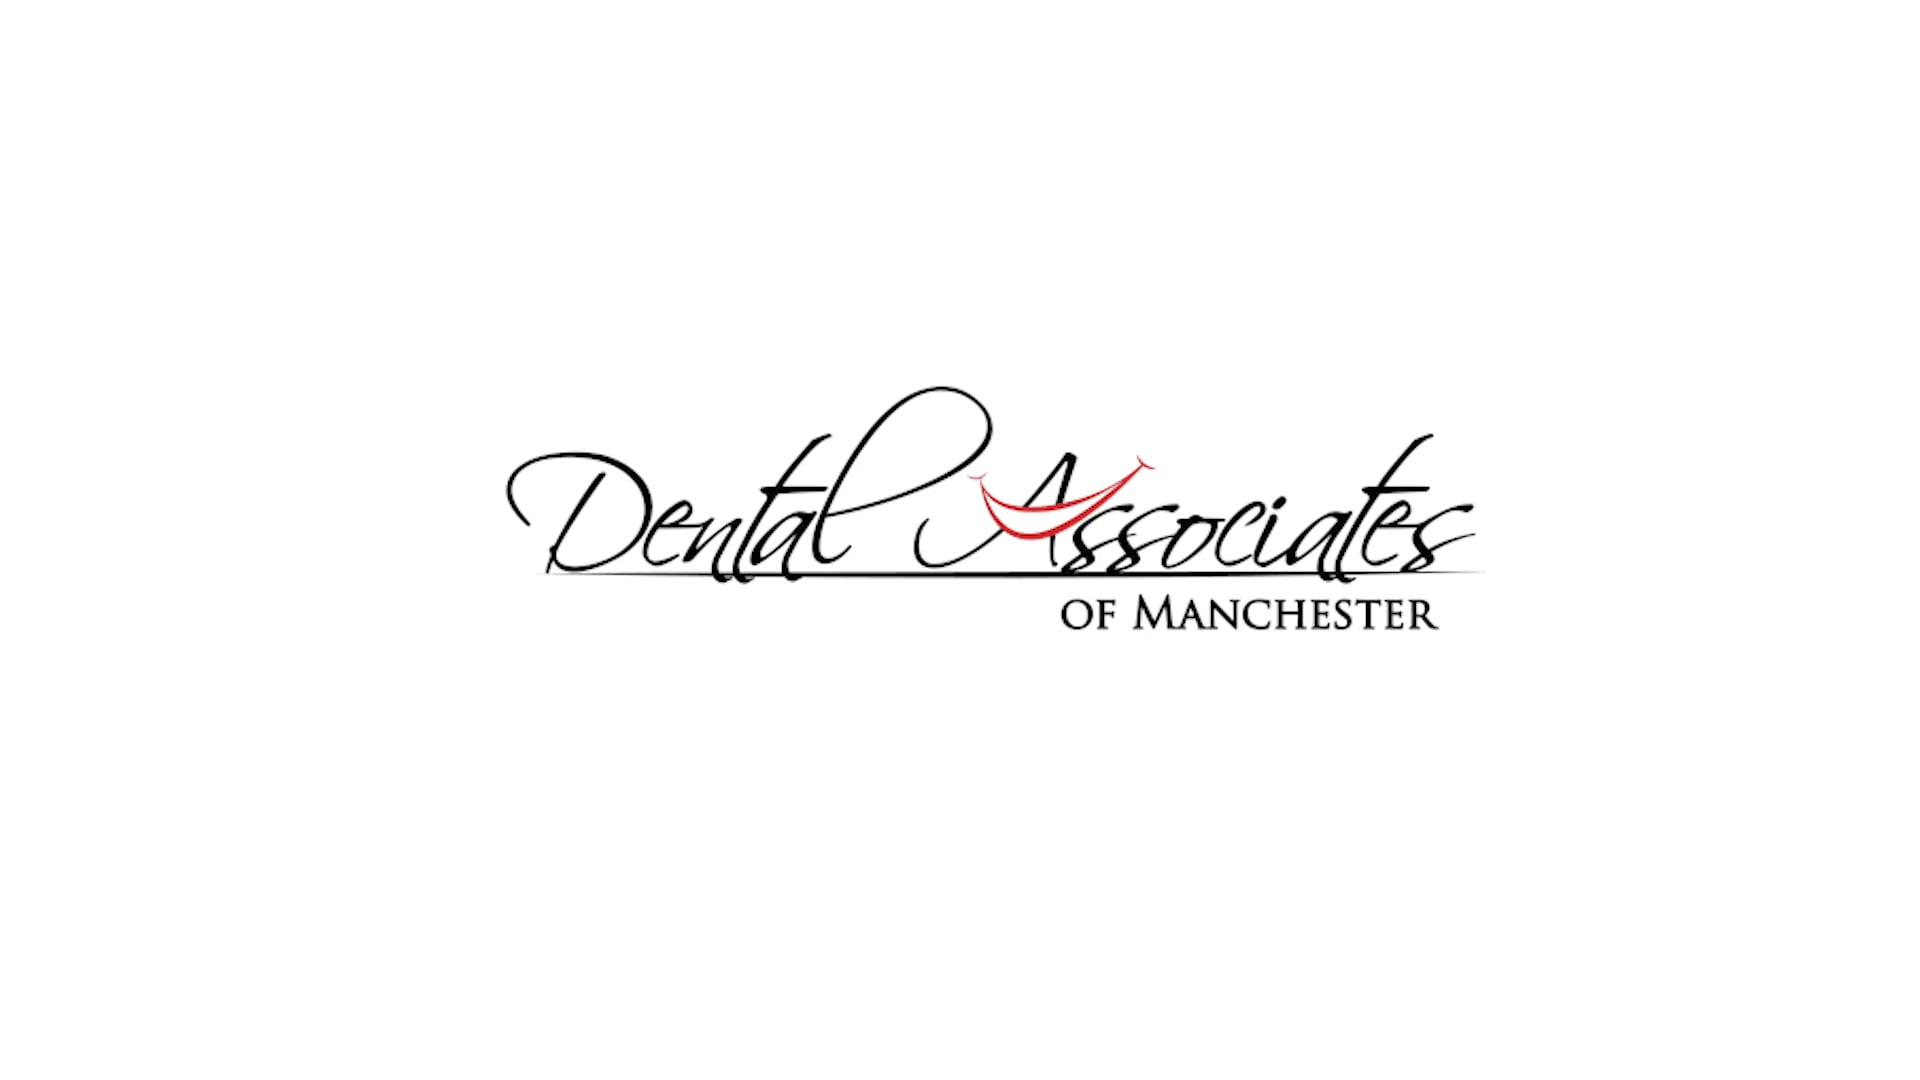 Dental Associates of Manchester, Iowa